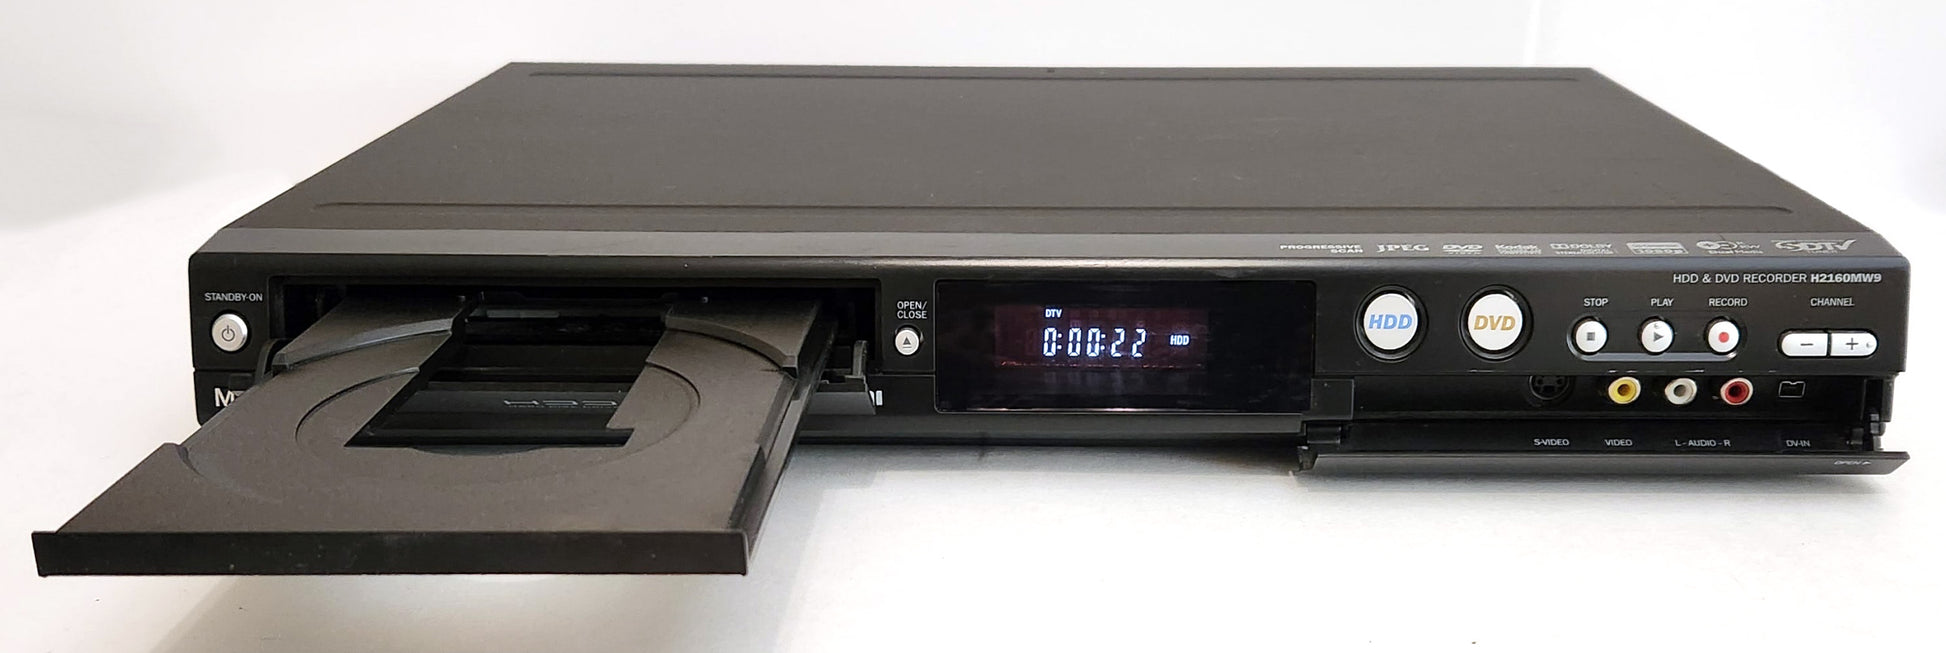 Magnavox H2160MW9 HDD/DVD Hard Disk Recorder with ATSC Tuner - Front